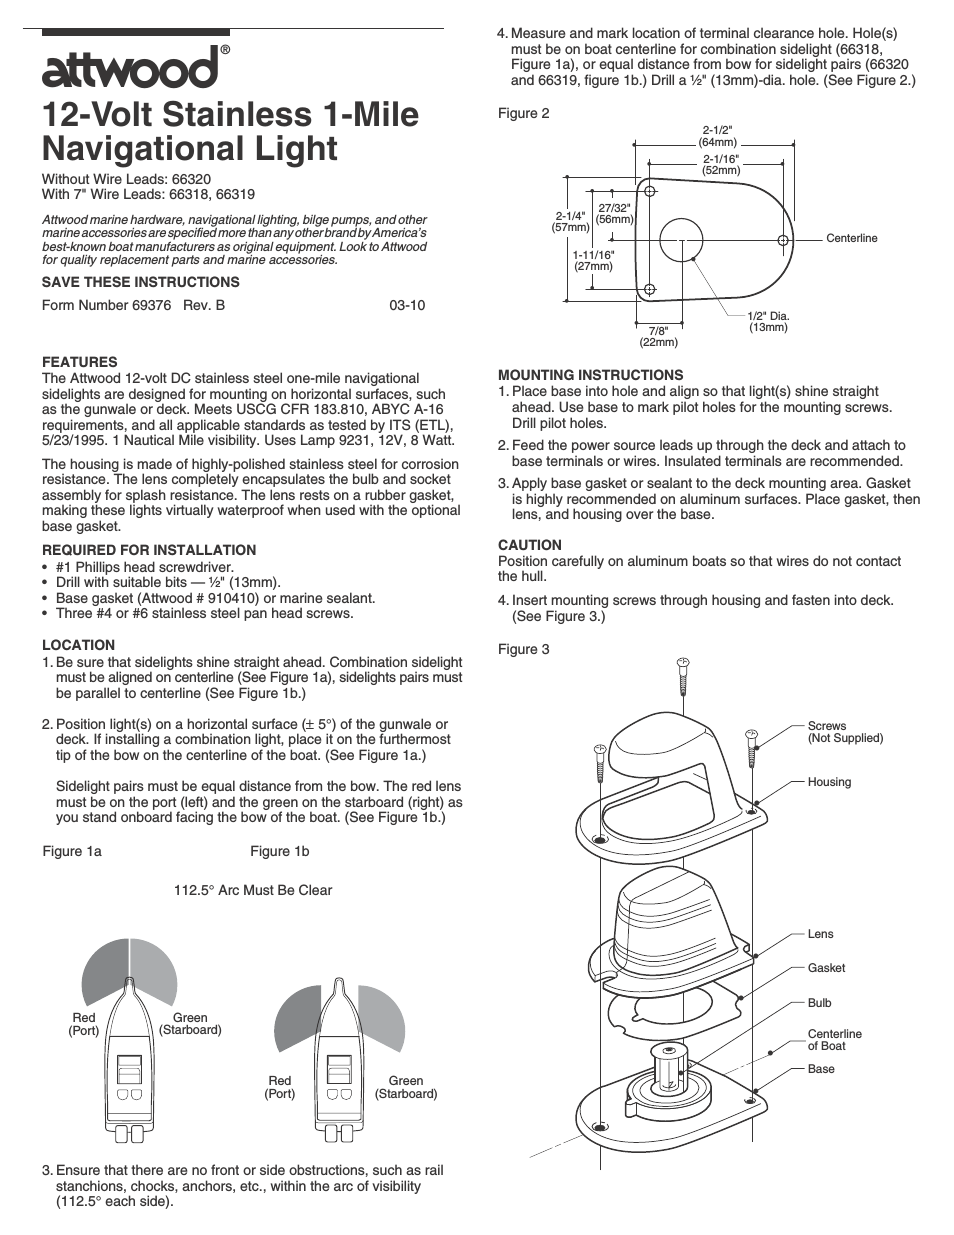 12-Volt Stainless 1-Mile Navigational Light